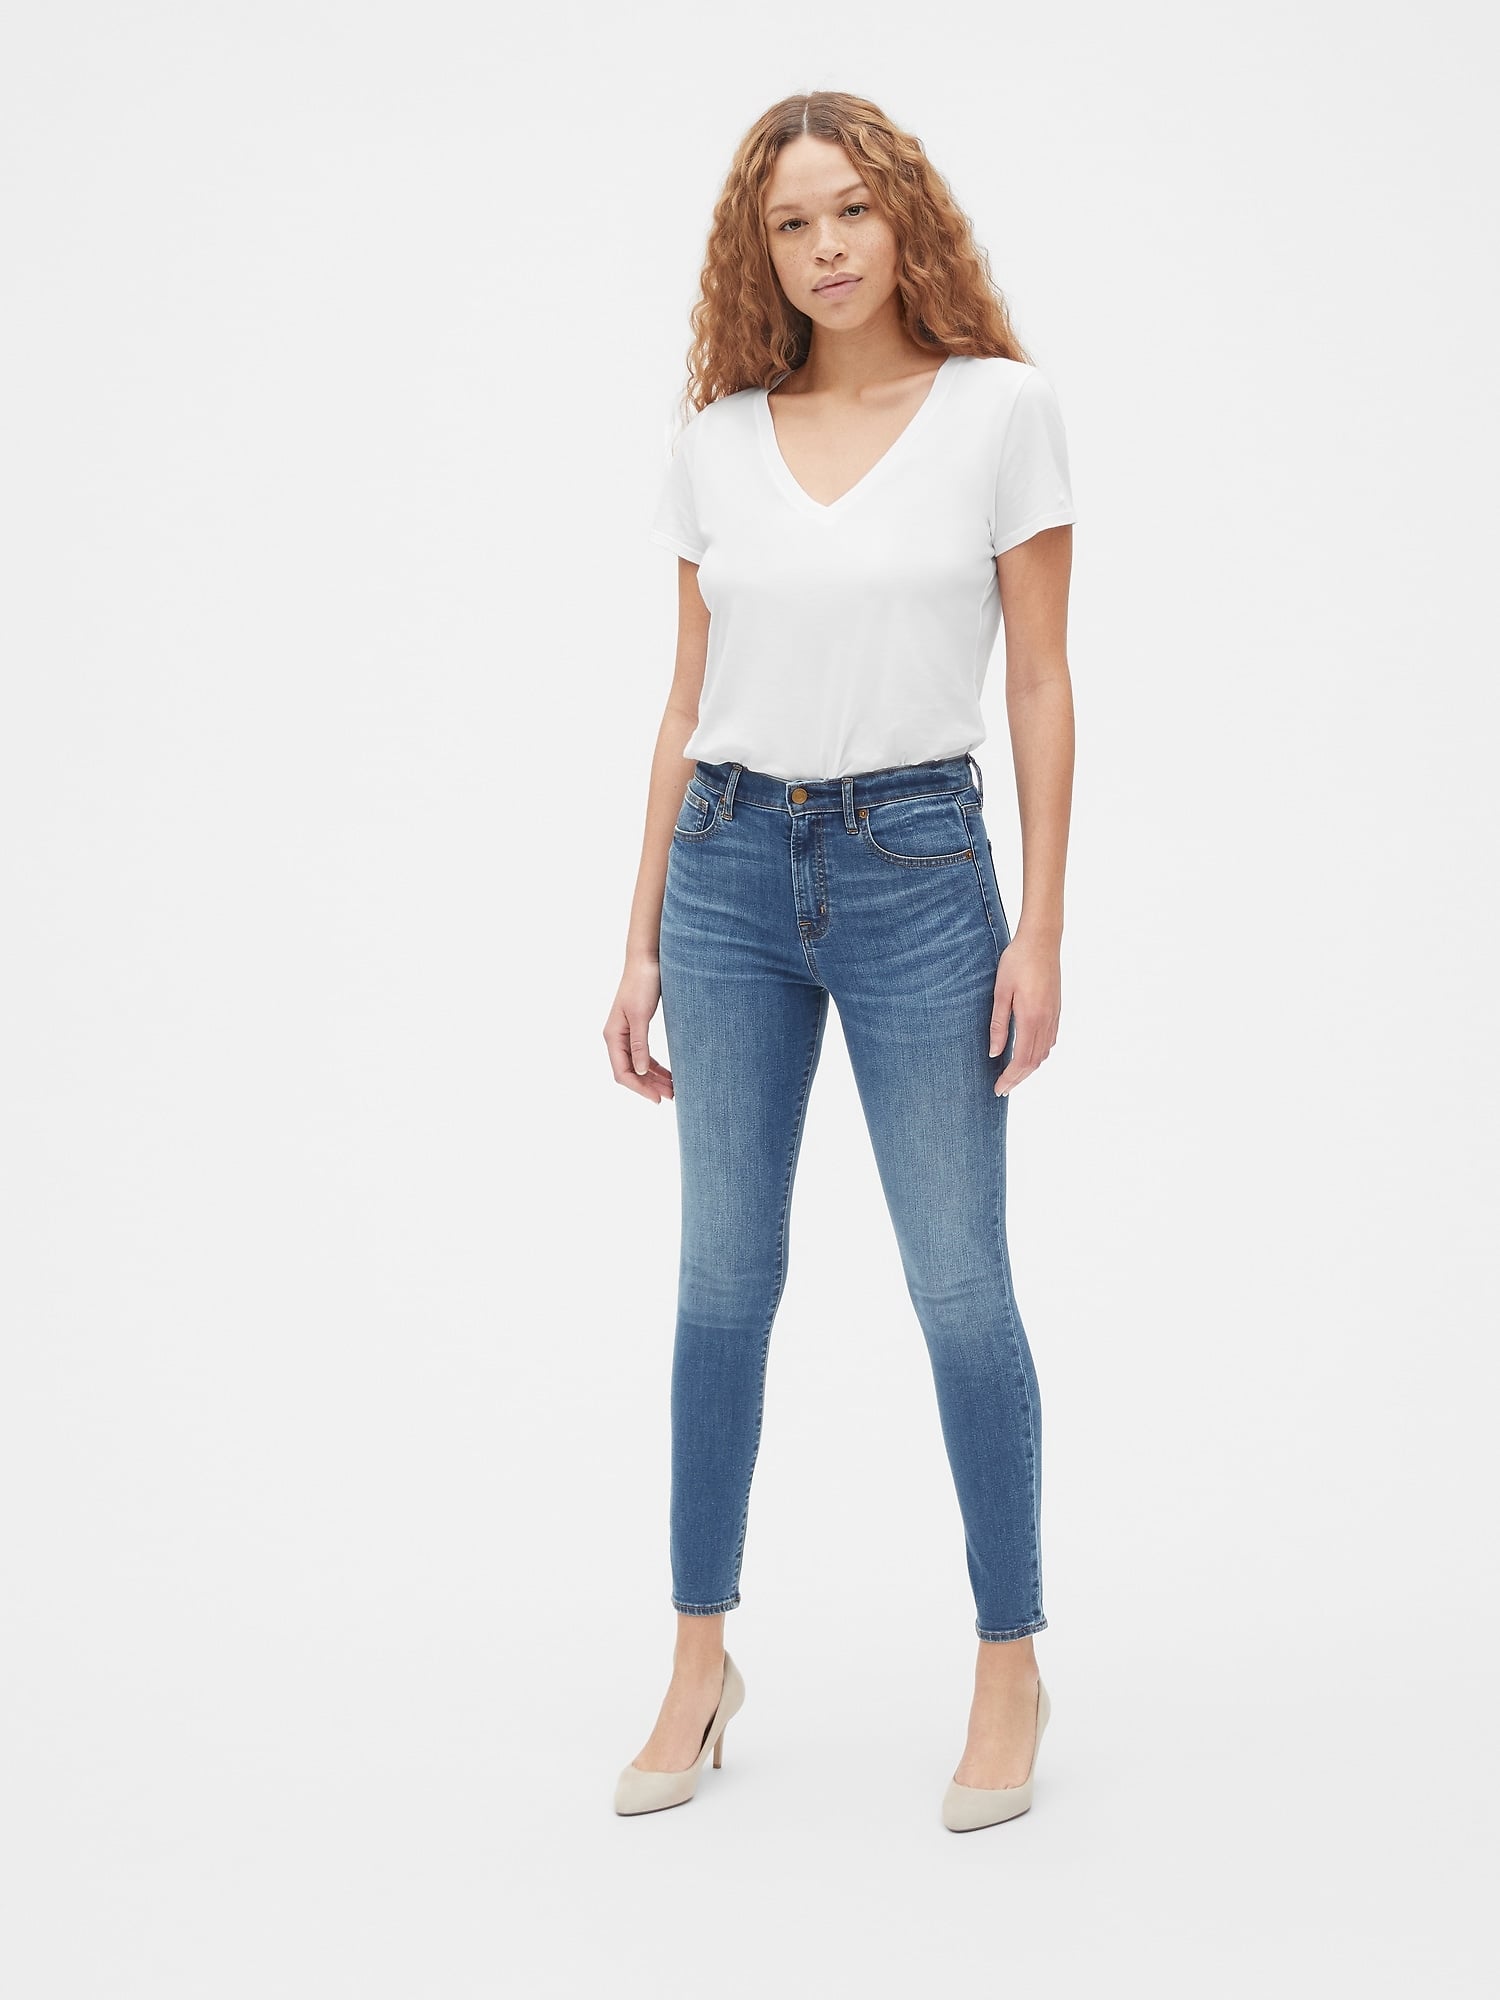 gap low rise true skinny jeans